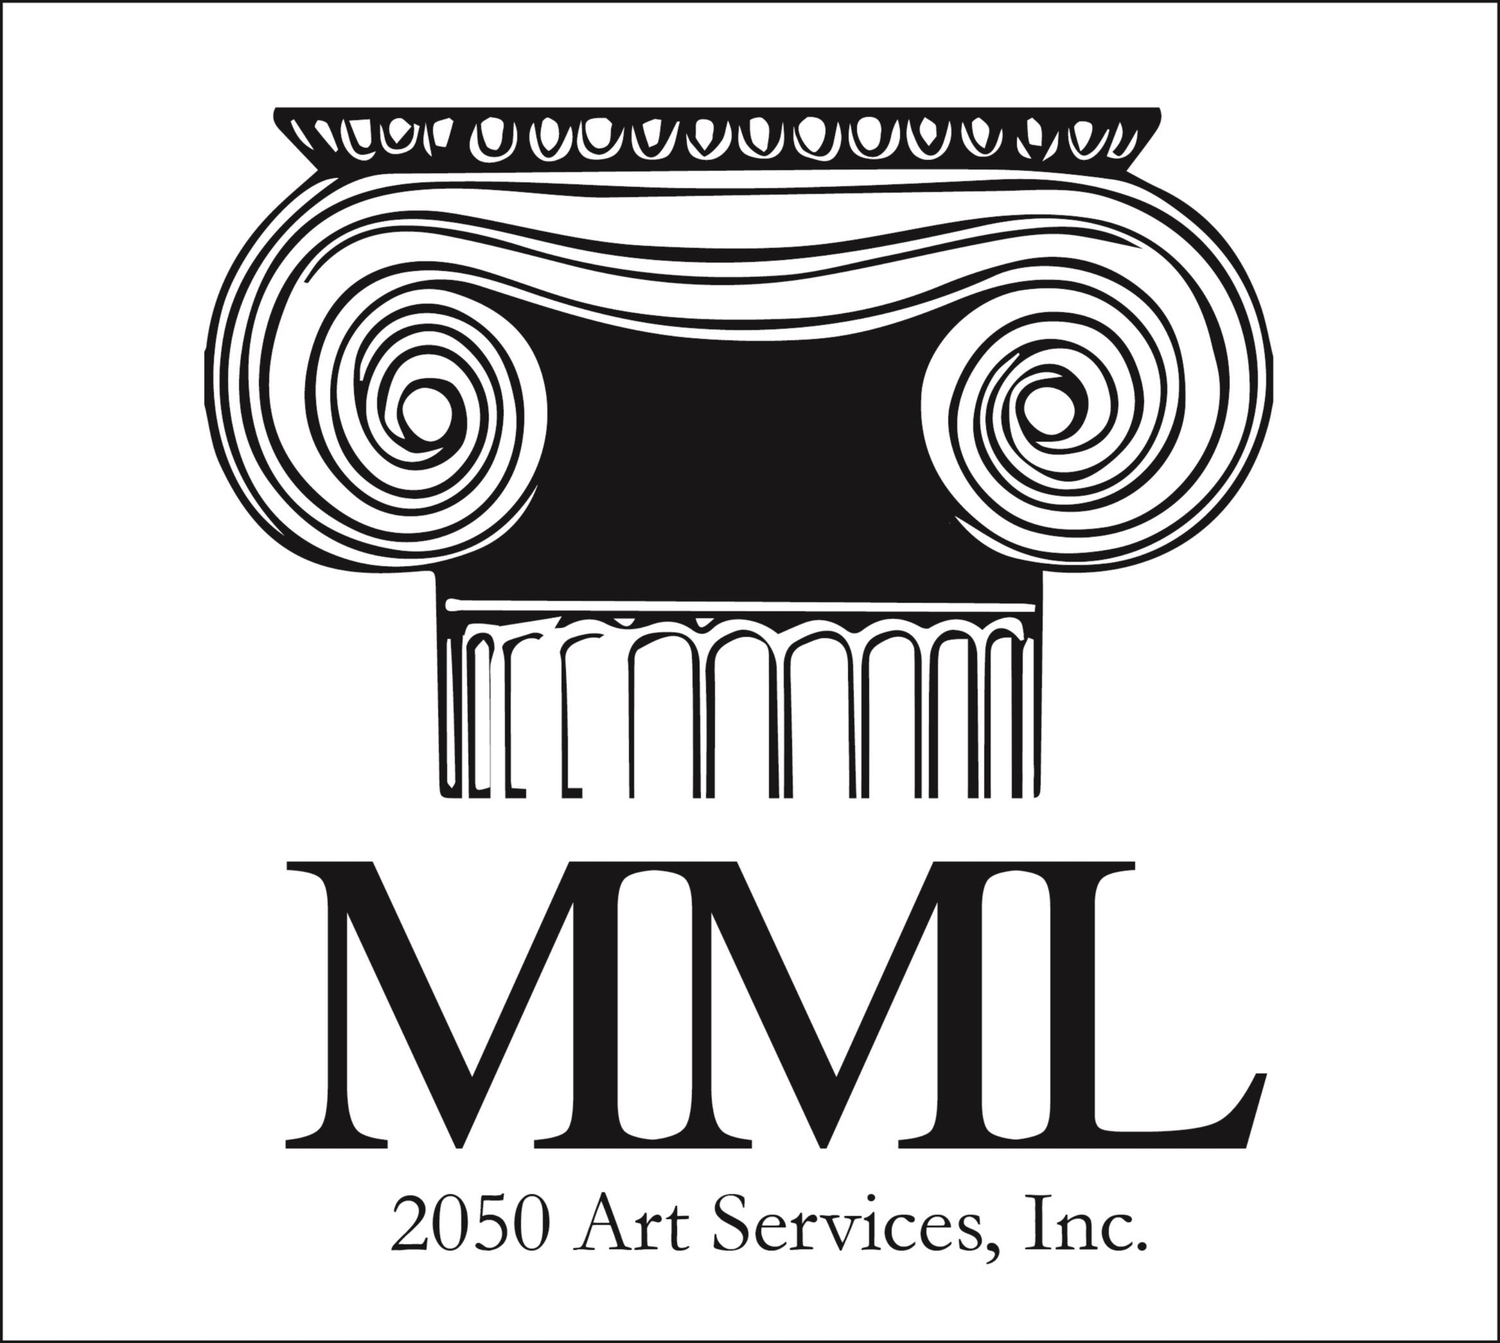 2050 Art Services, Inc. Molly Morse Limmer